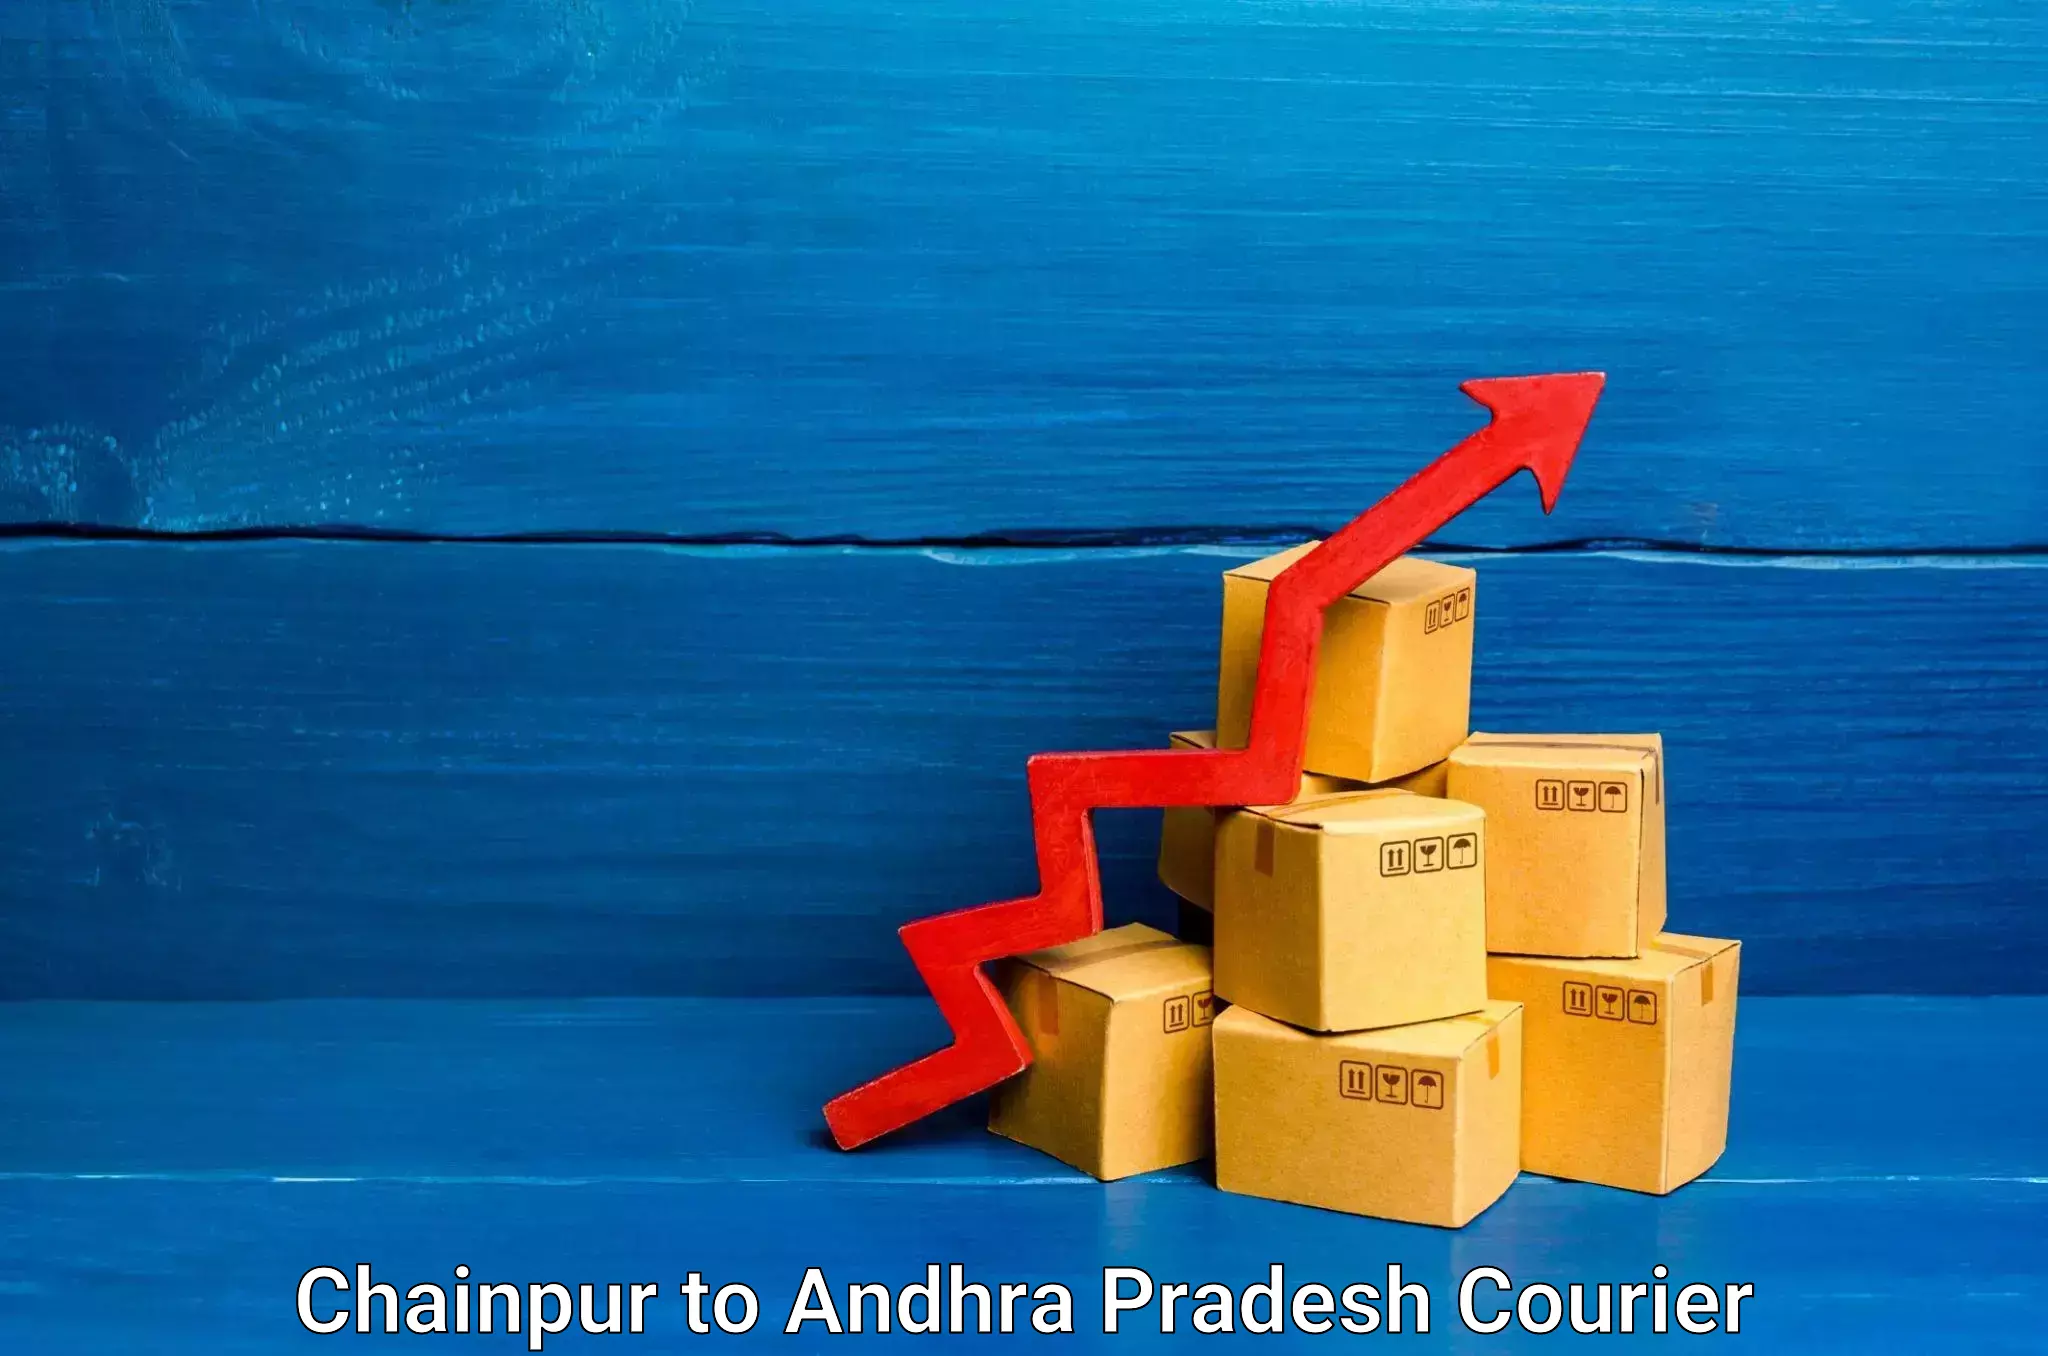 Efficient moving company Chainpur to Yellamanchili